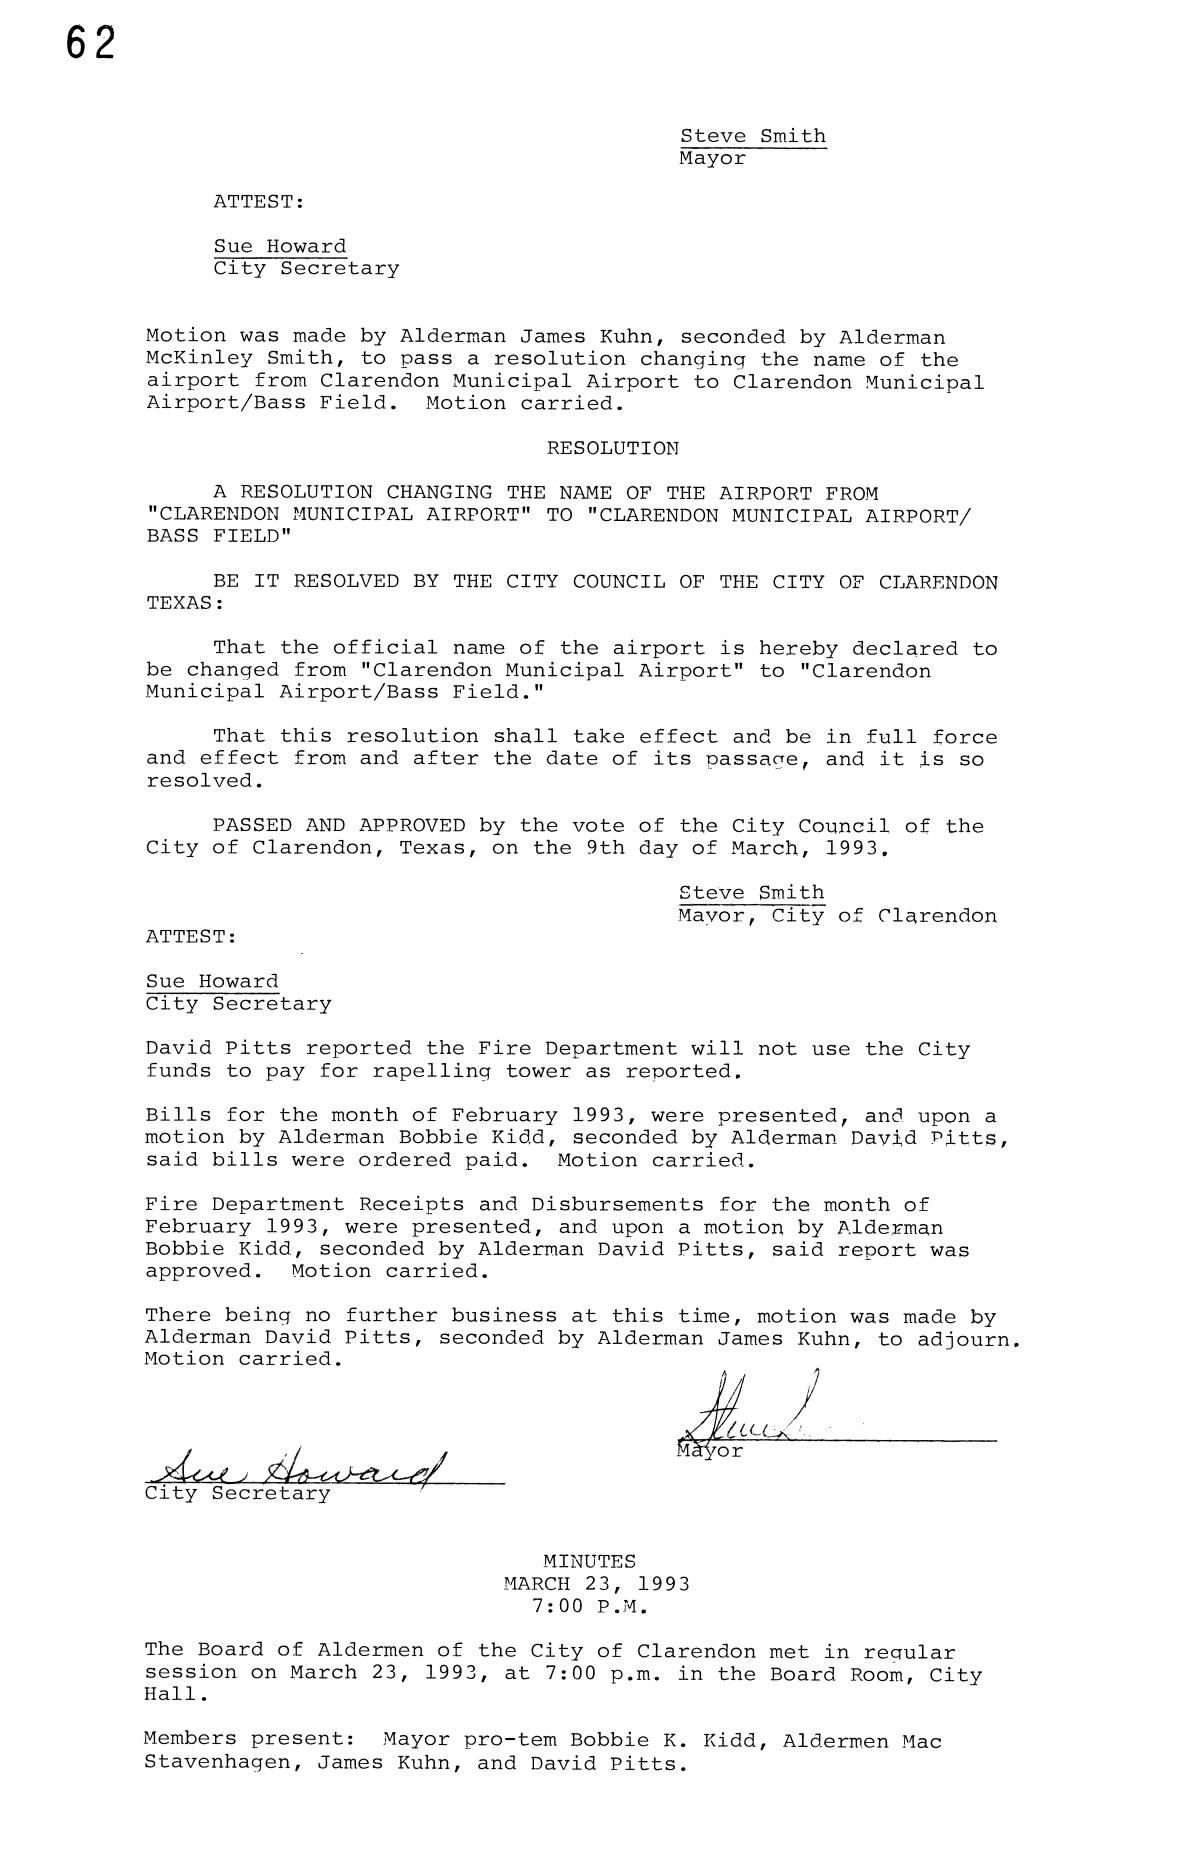 [City of Clarendon Ledger: Minutes for September 10, 1991 - September 25, 2003]
                                                
                                                    62
                                                